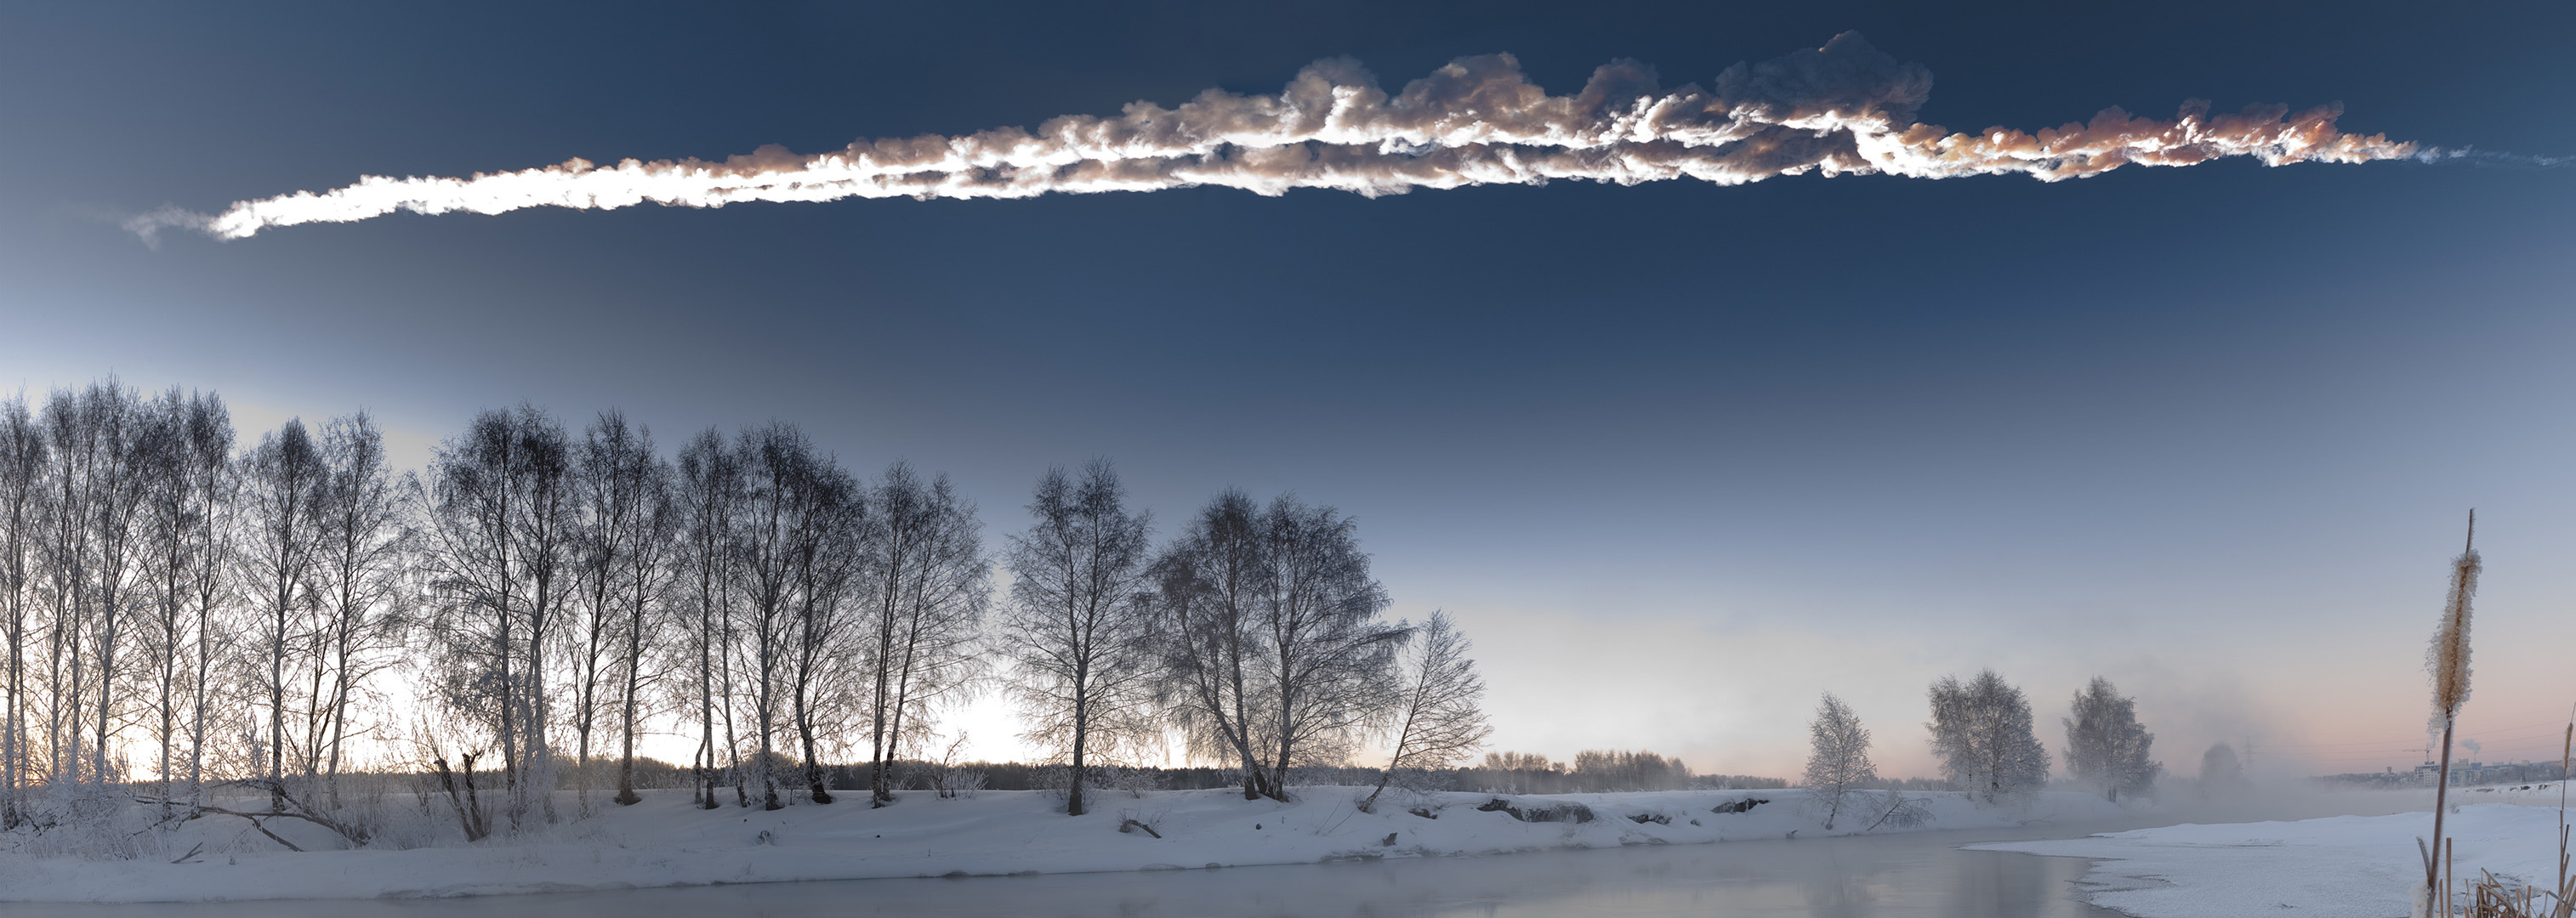 Chelyabinsk meteorite trail in the sky The Society